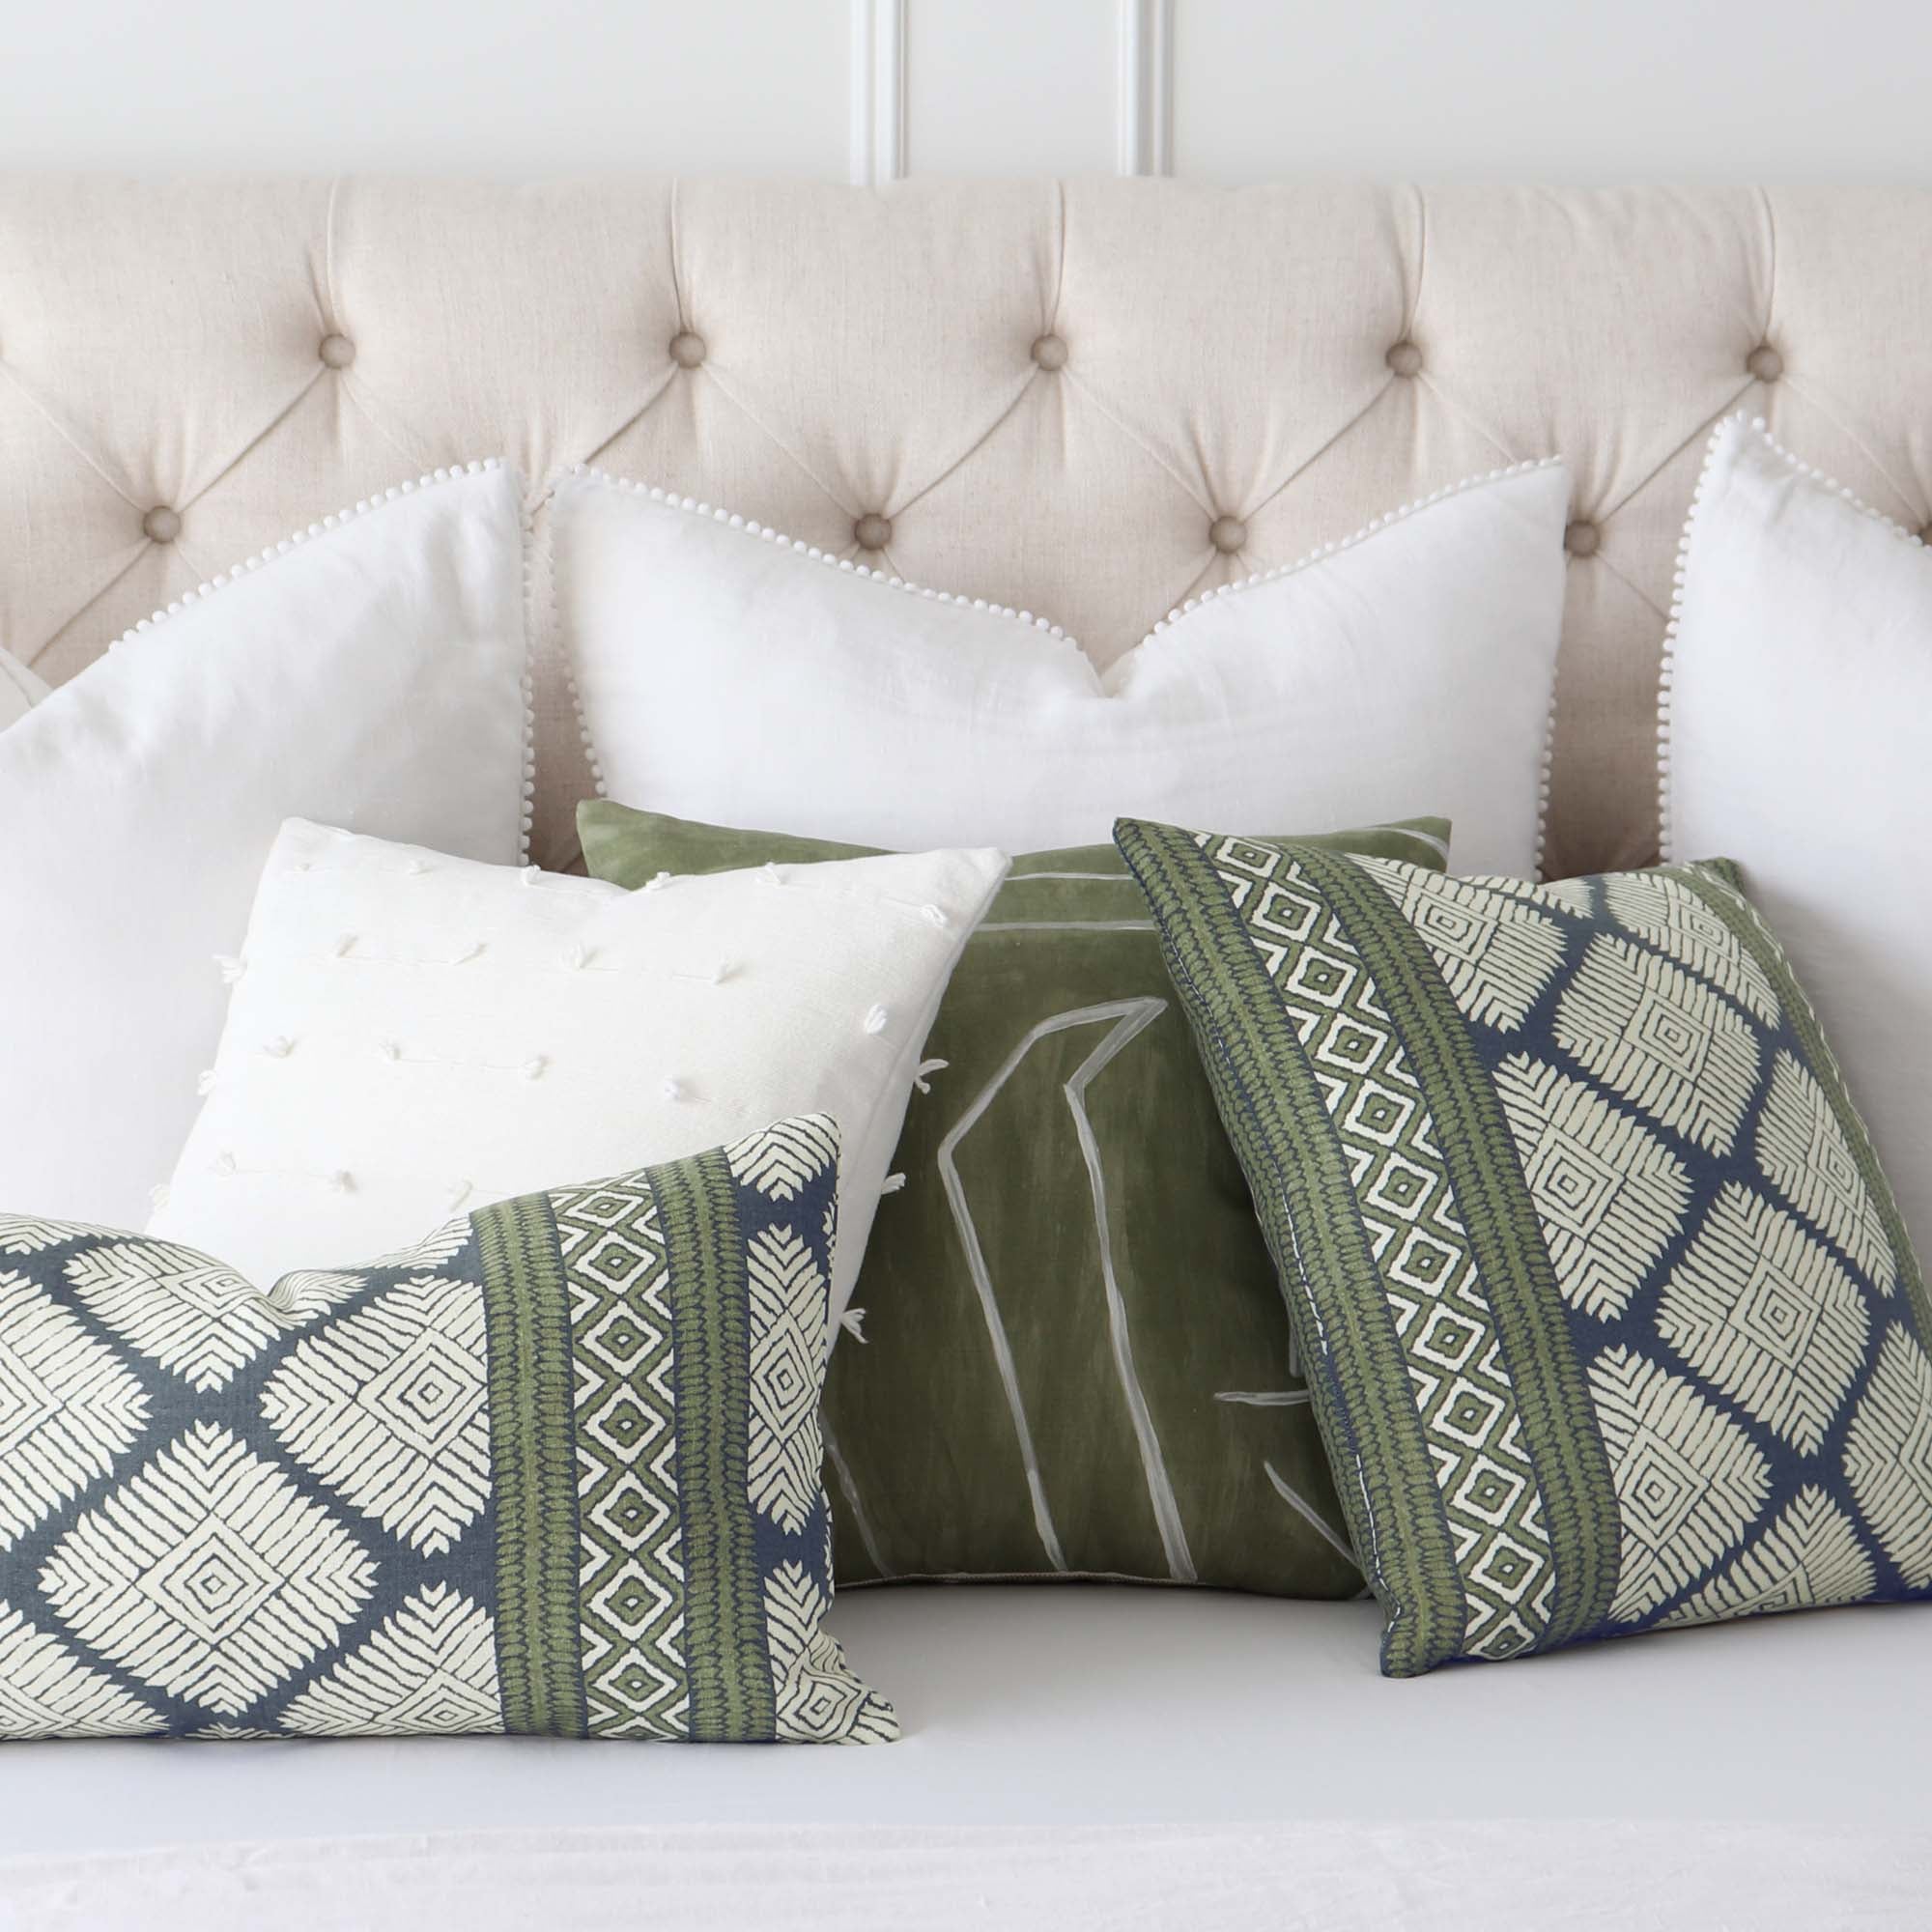 Thibaut Austin Bluestone and Green Ikat Block Print Designer Luxury Decorative Throw Pillow Cover with Matching Pillow Mix